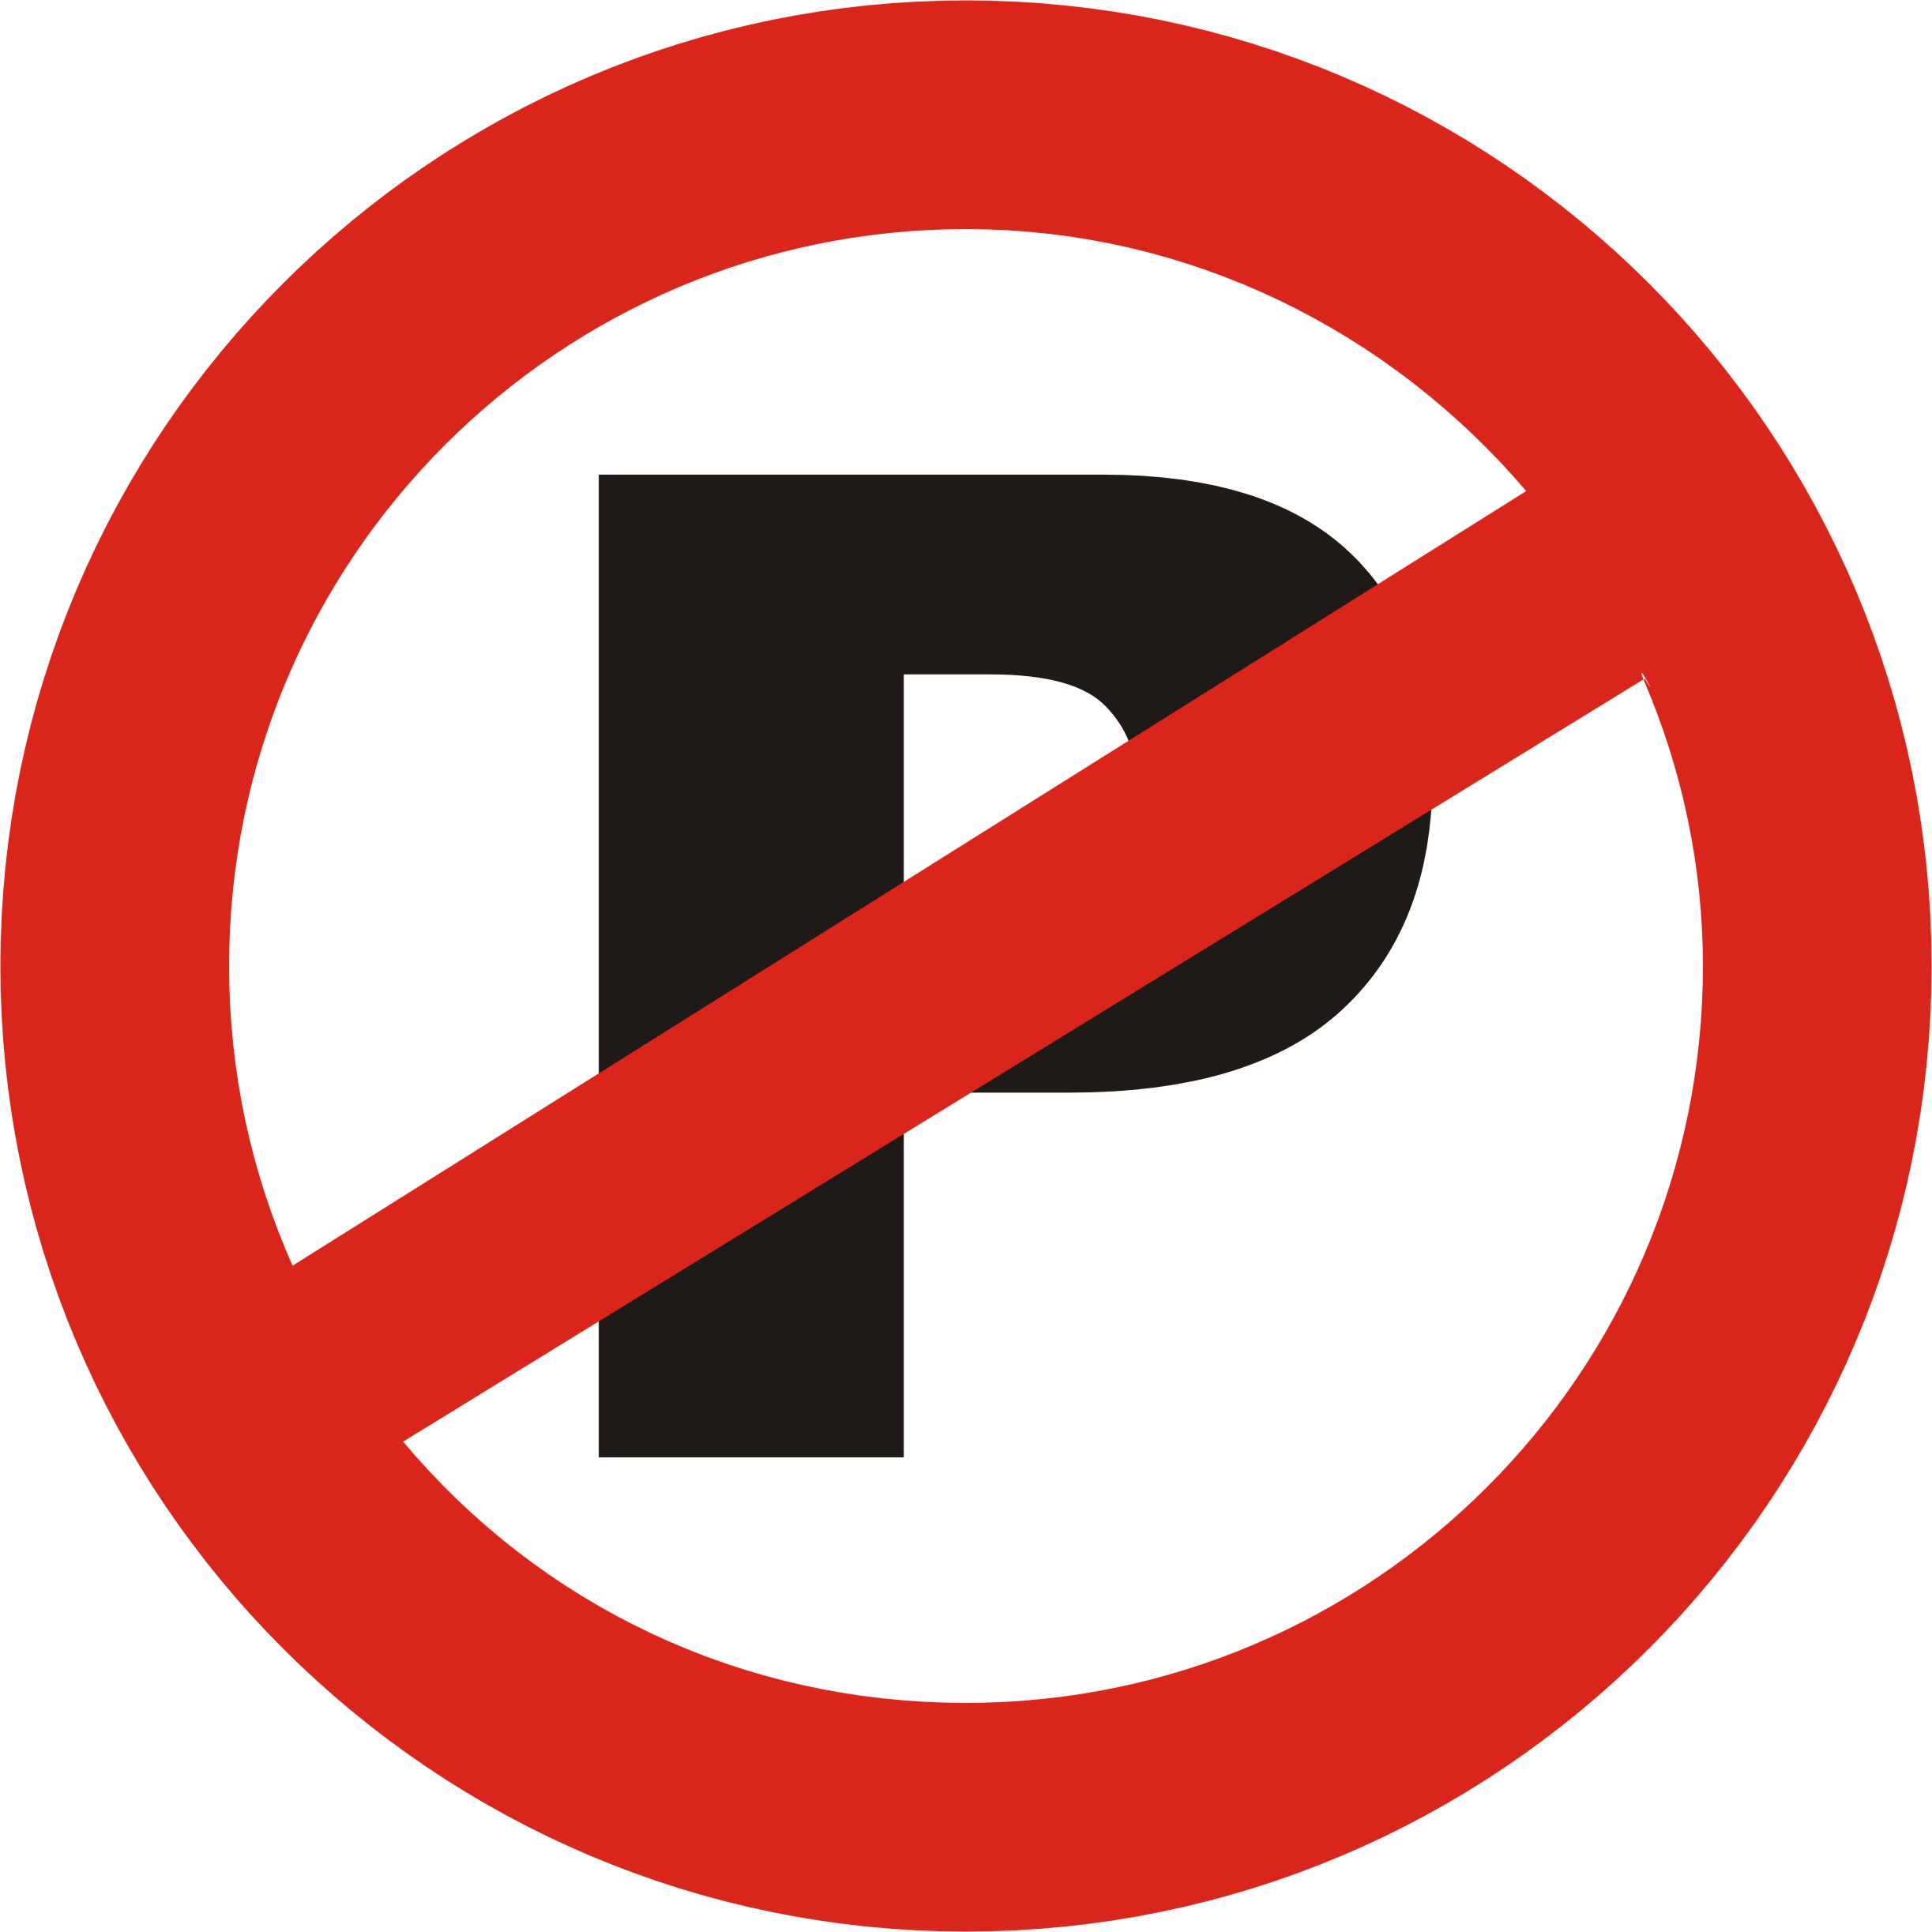 Free Printable No Parking Signs, Download Free Printable No Parking Signs png images, Free